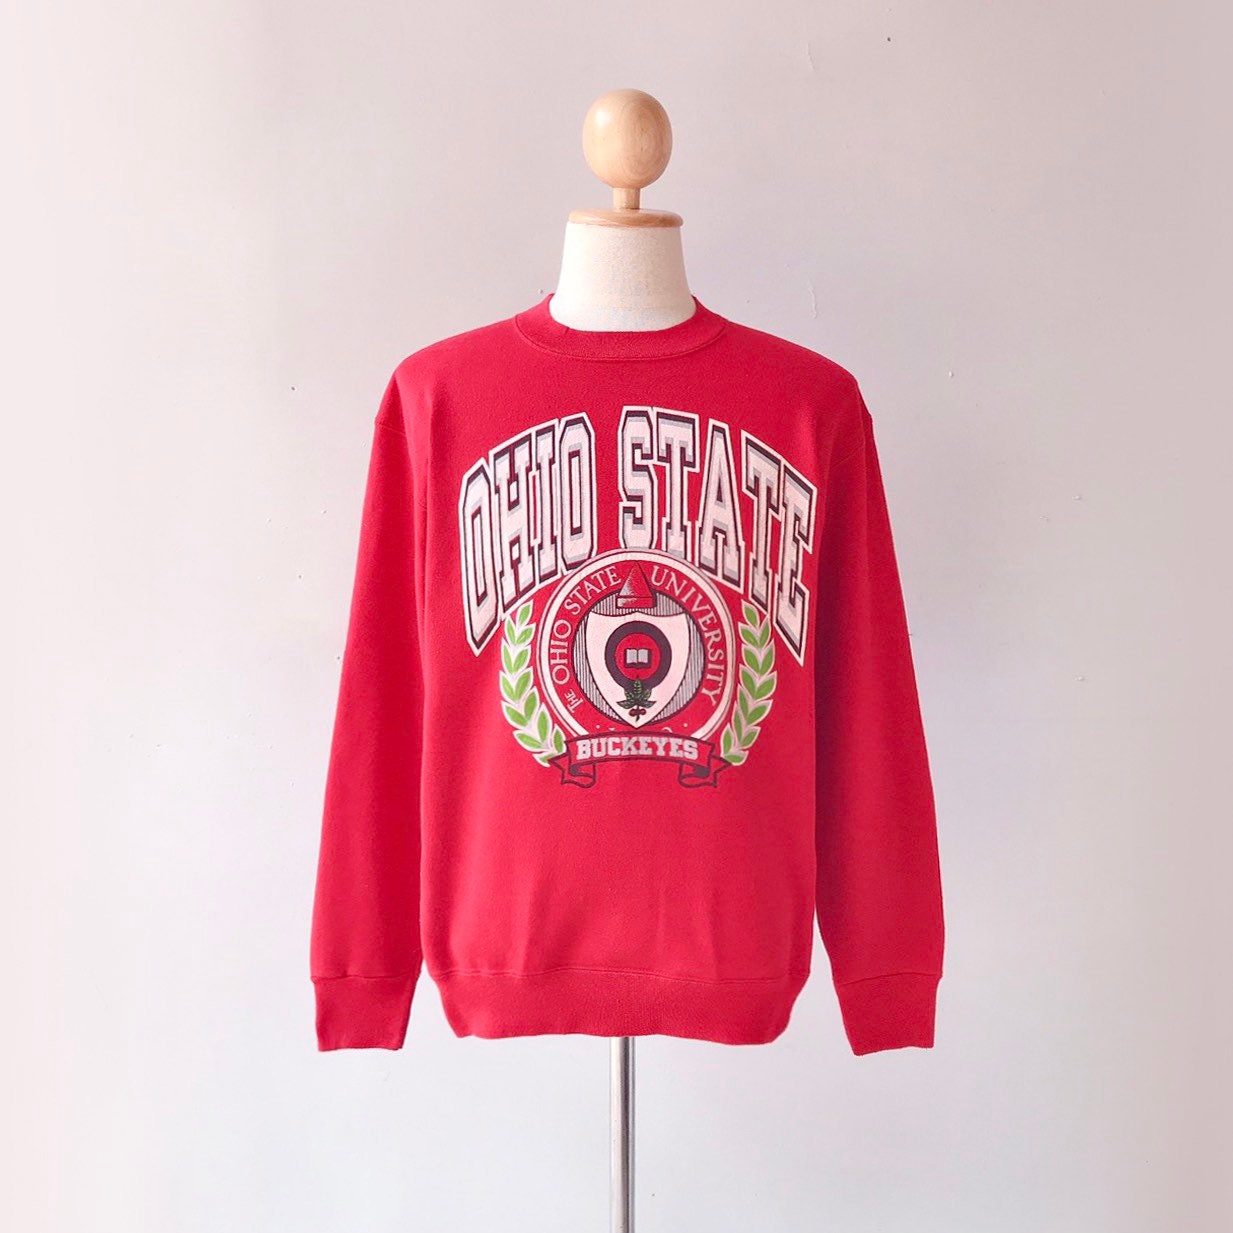 Vintage Ohio State University Buckeyes Sweatshirt size M | Etsy